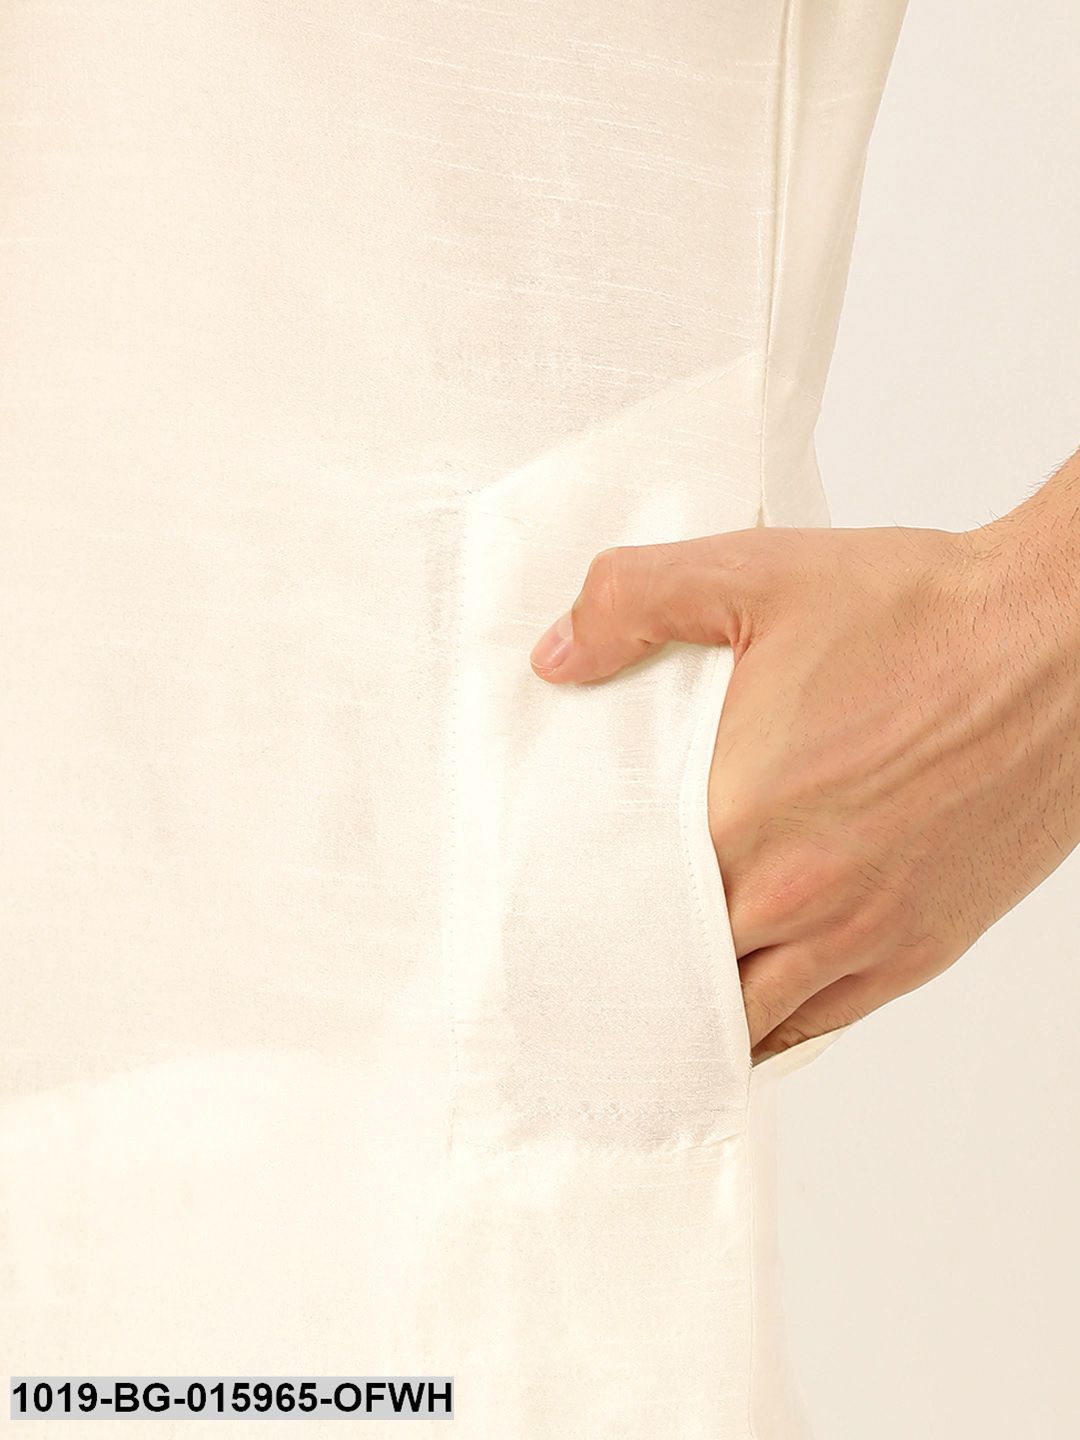 Men's Silk Blend Off White Kurta Pyjama & Beige Nehru jacket Combo - Sojanya